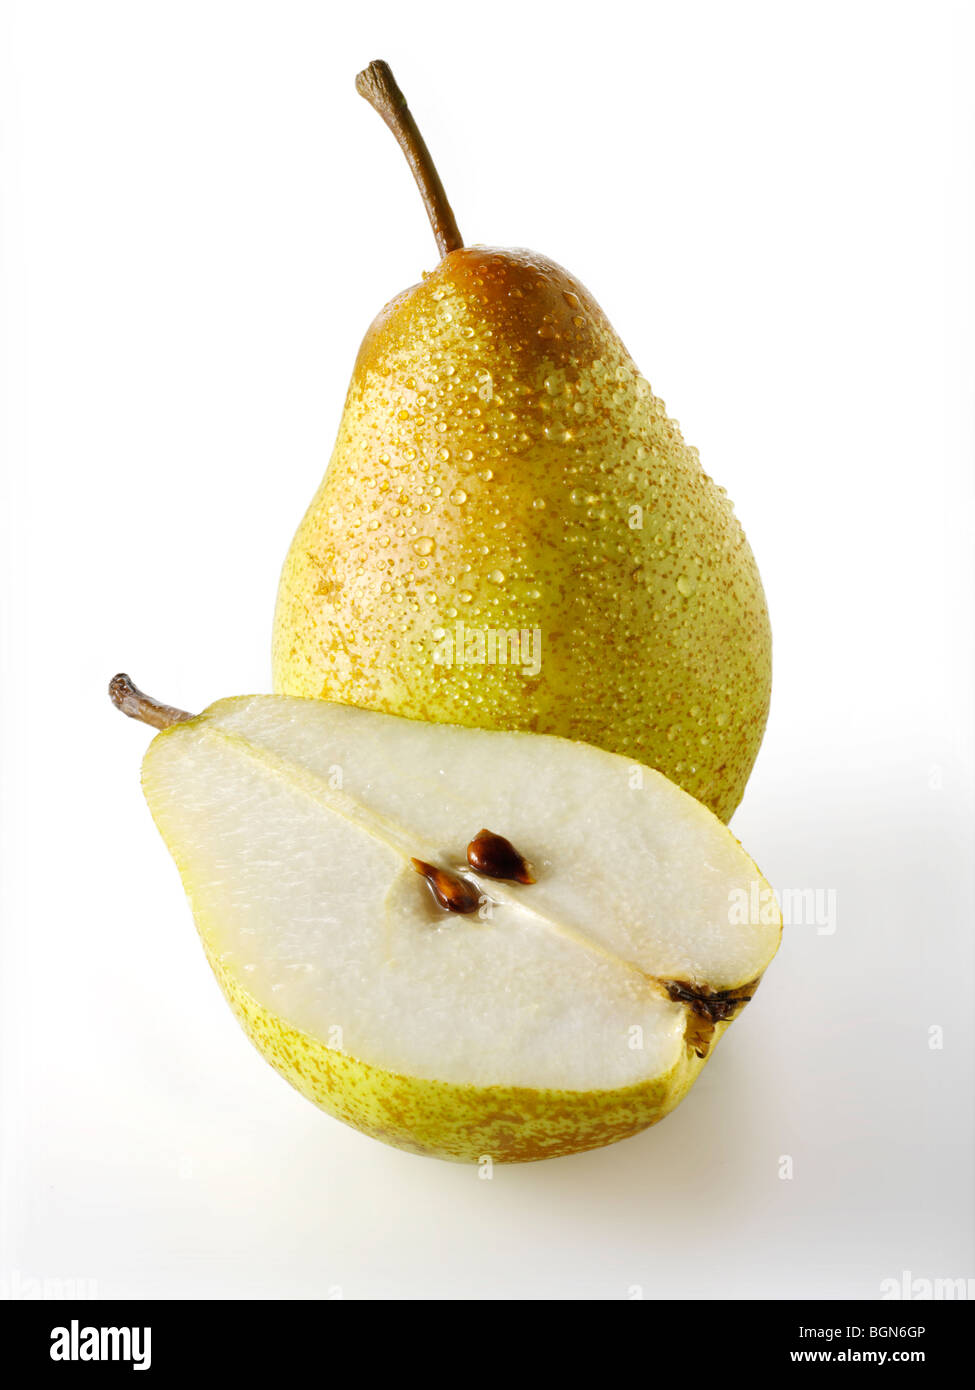 https://c8.alamy.com/comp/BGN6GP/fresh-comice-pears-whole-and-cut-BGN6GP.jpg